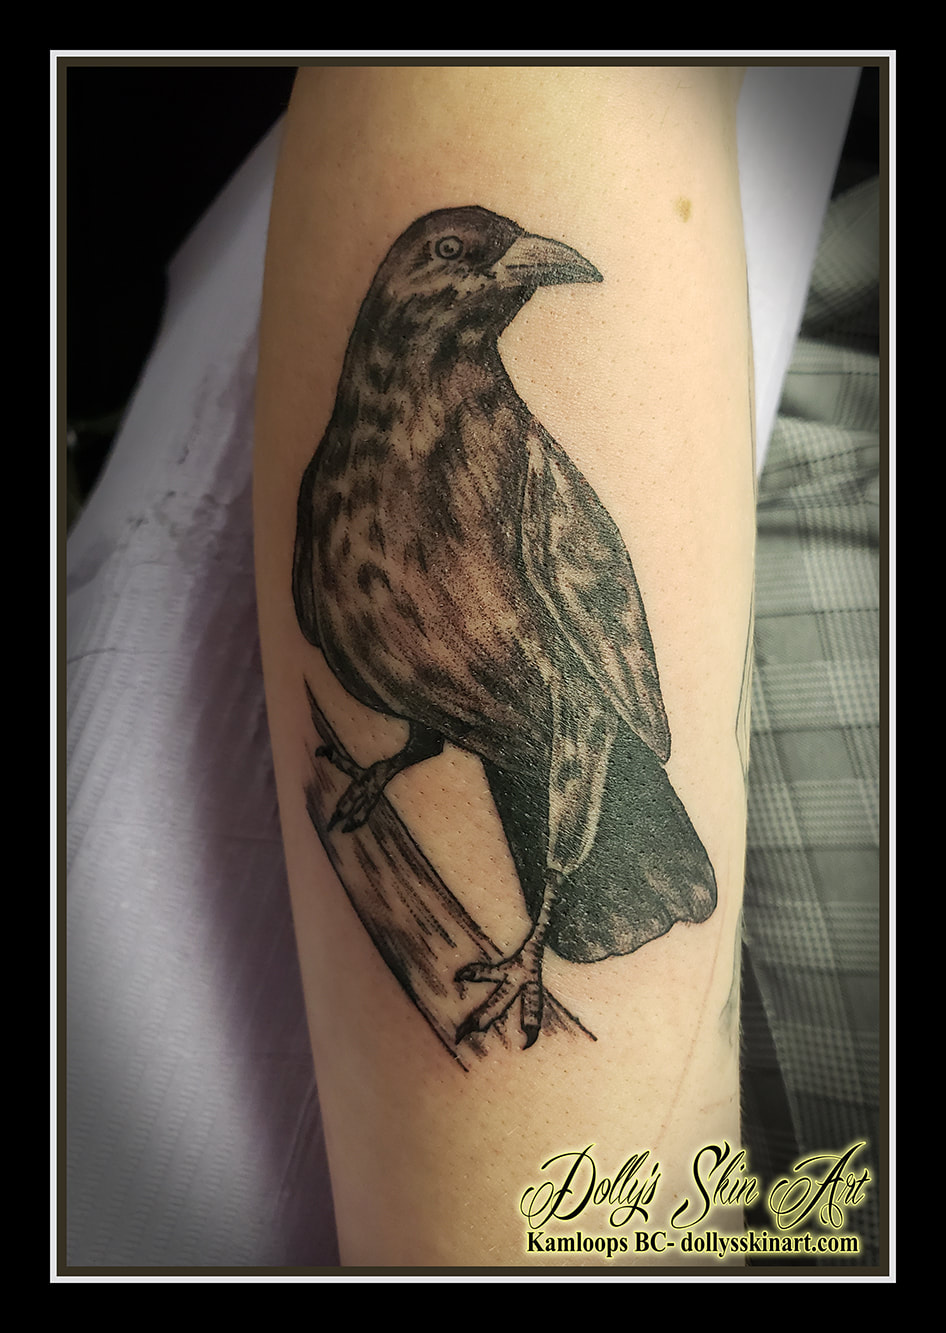 crow tattoo black and grey shading forearm bird branch tattoo dolly's skin art kamloops